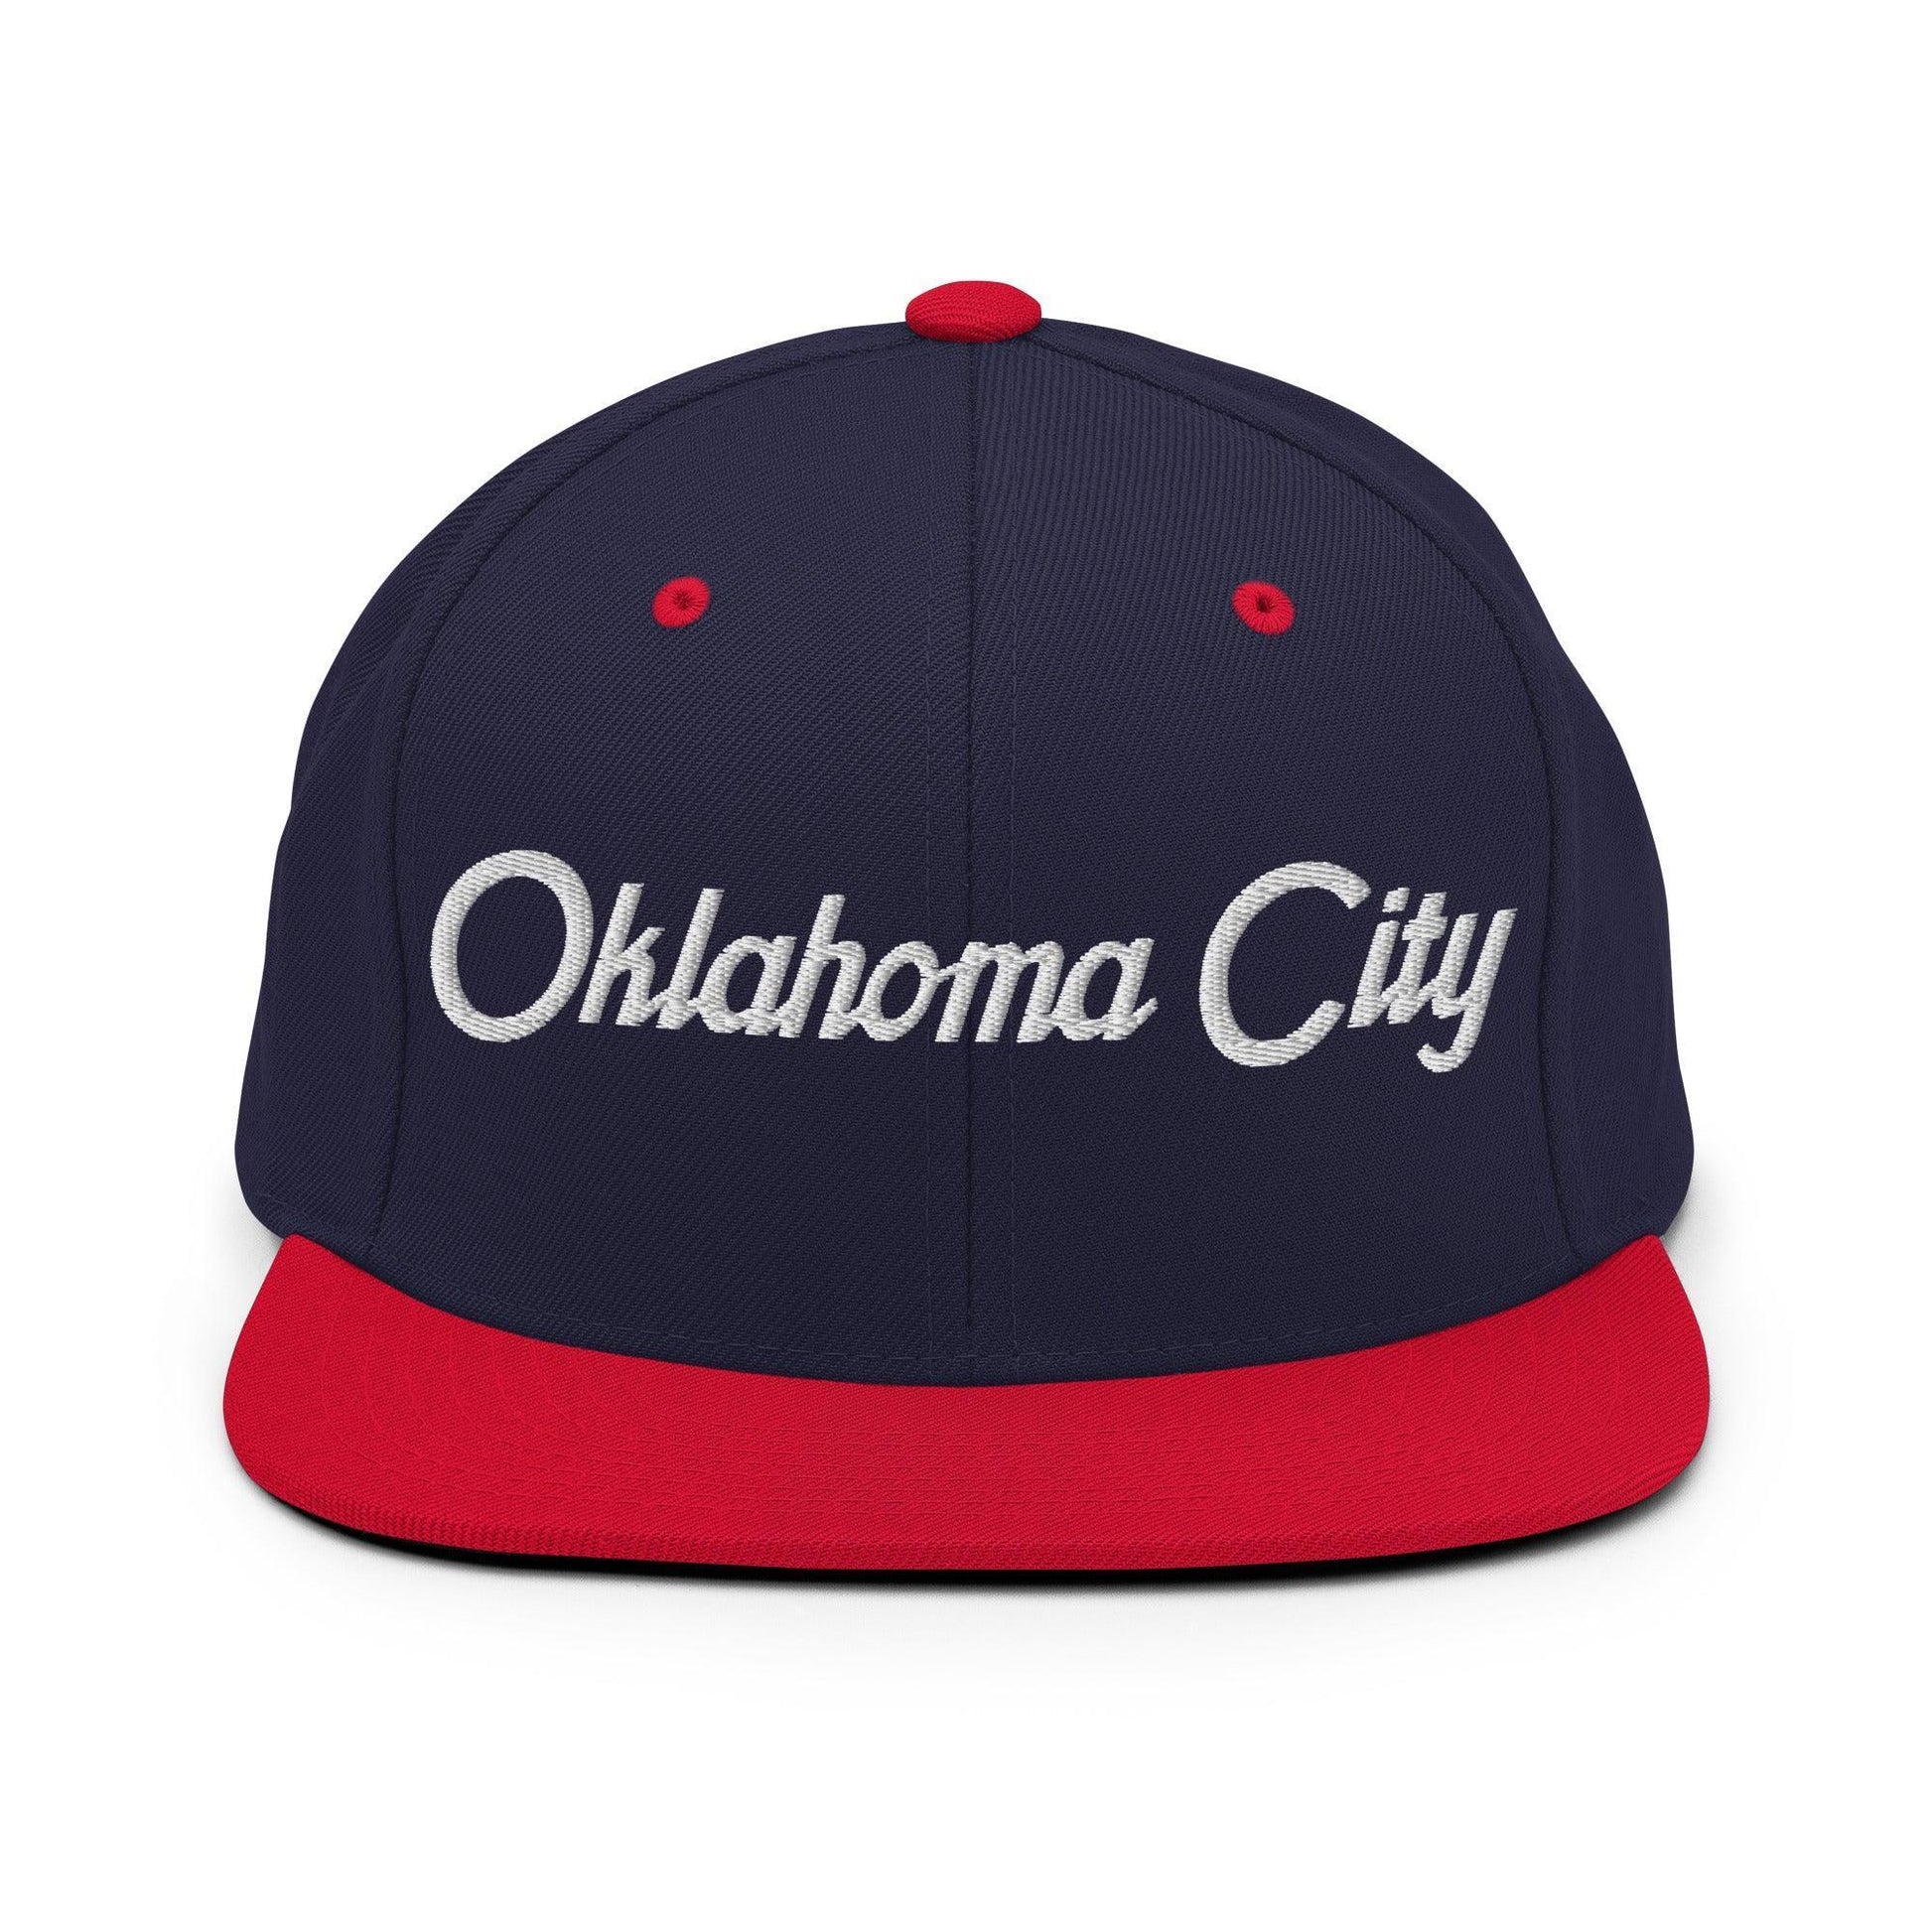 Oklahoma City Script Snapback Hat Navy Red